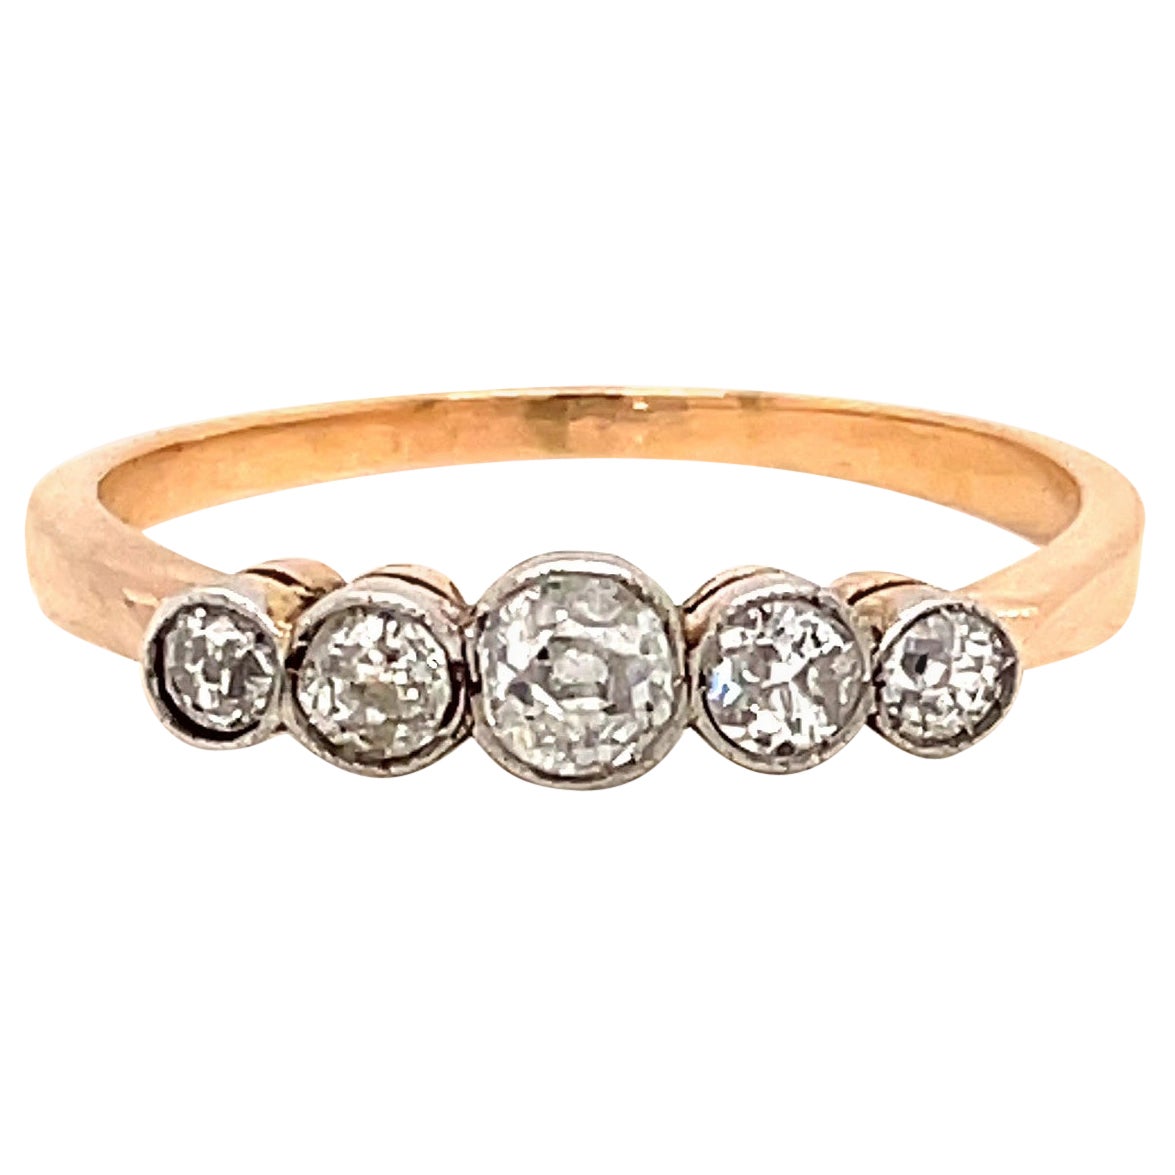 Victorian Inspired 5 Stone Old European Cut Diamond 18 Karat Rose Gold Band Ring